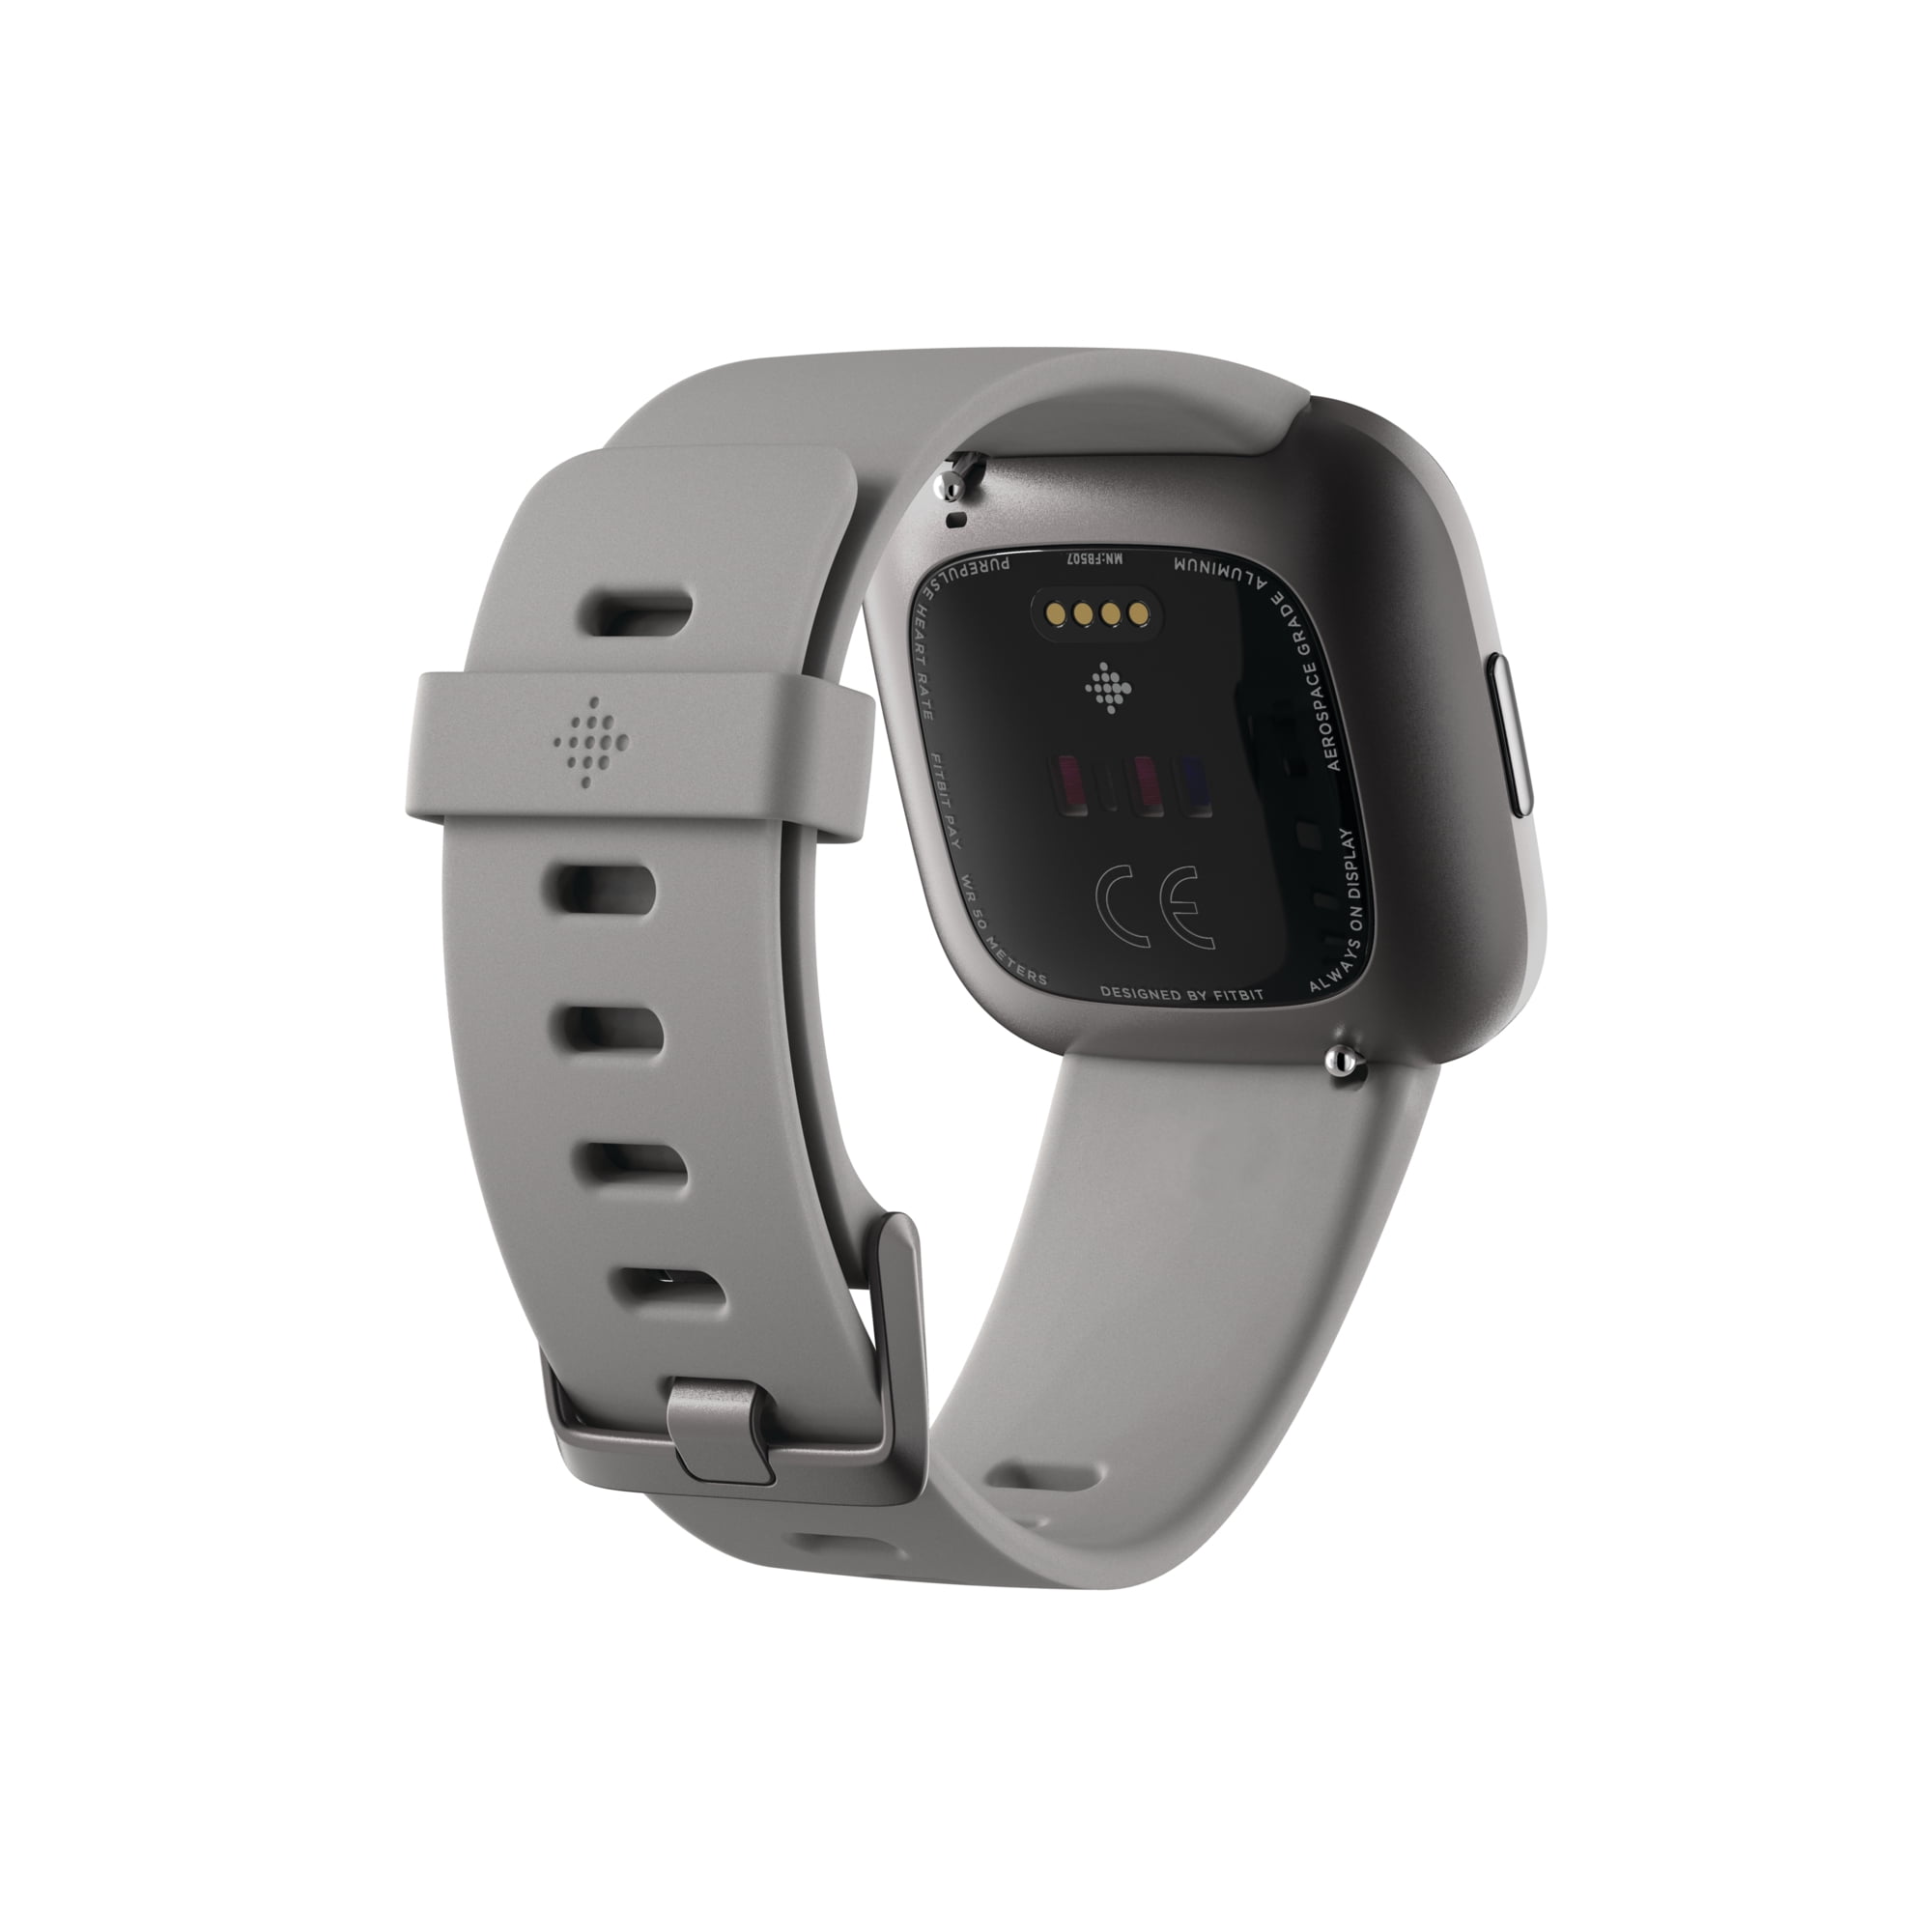 Fitbit Versa 2 Health & Fitness Smartwatch - Stone/Mist Grey Aluminum